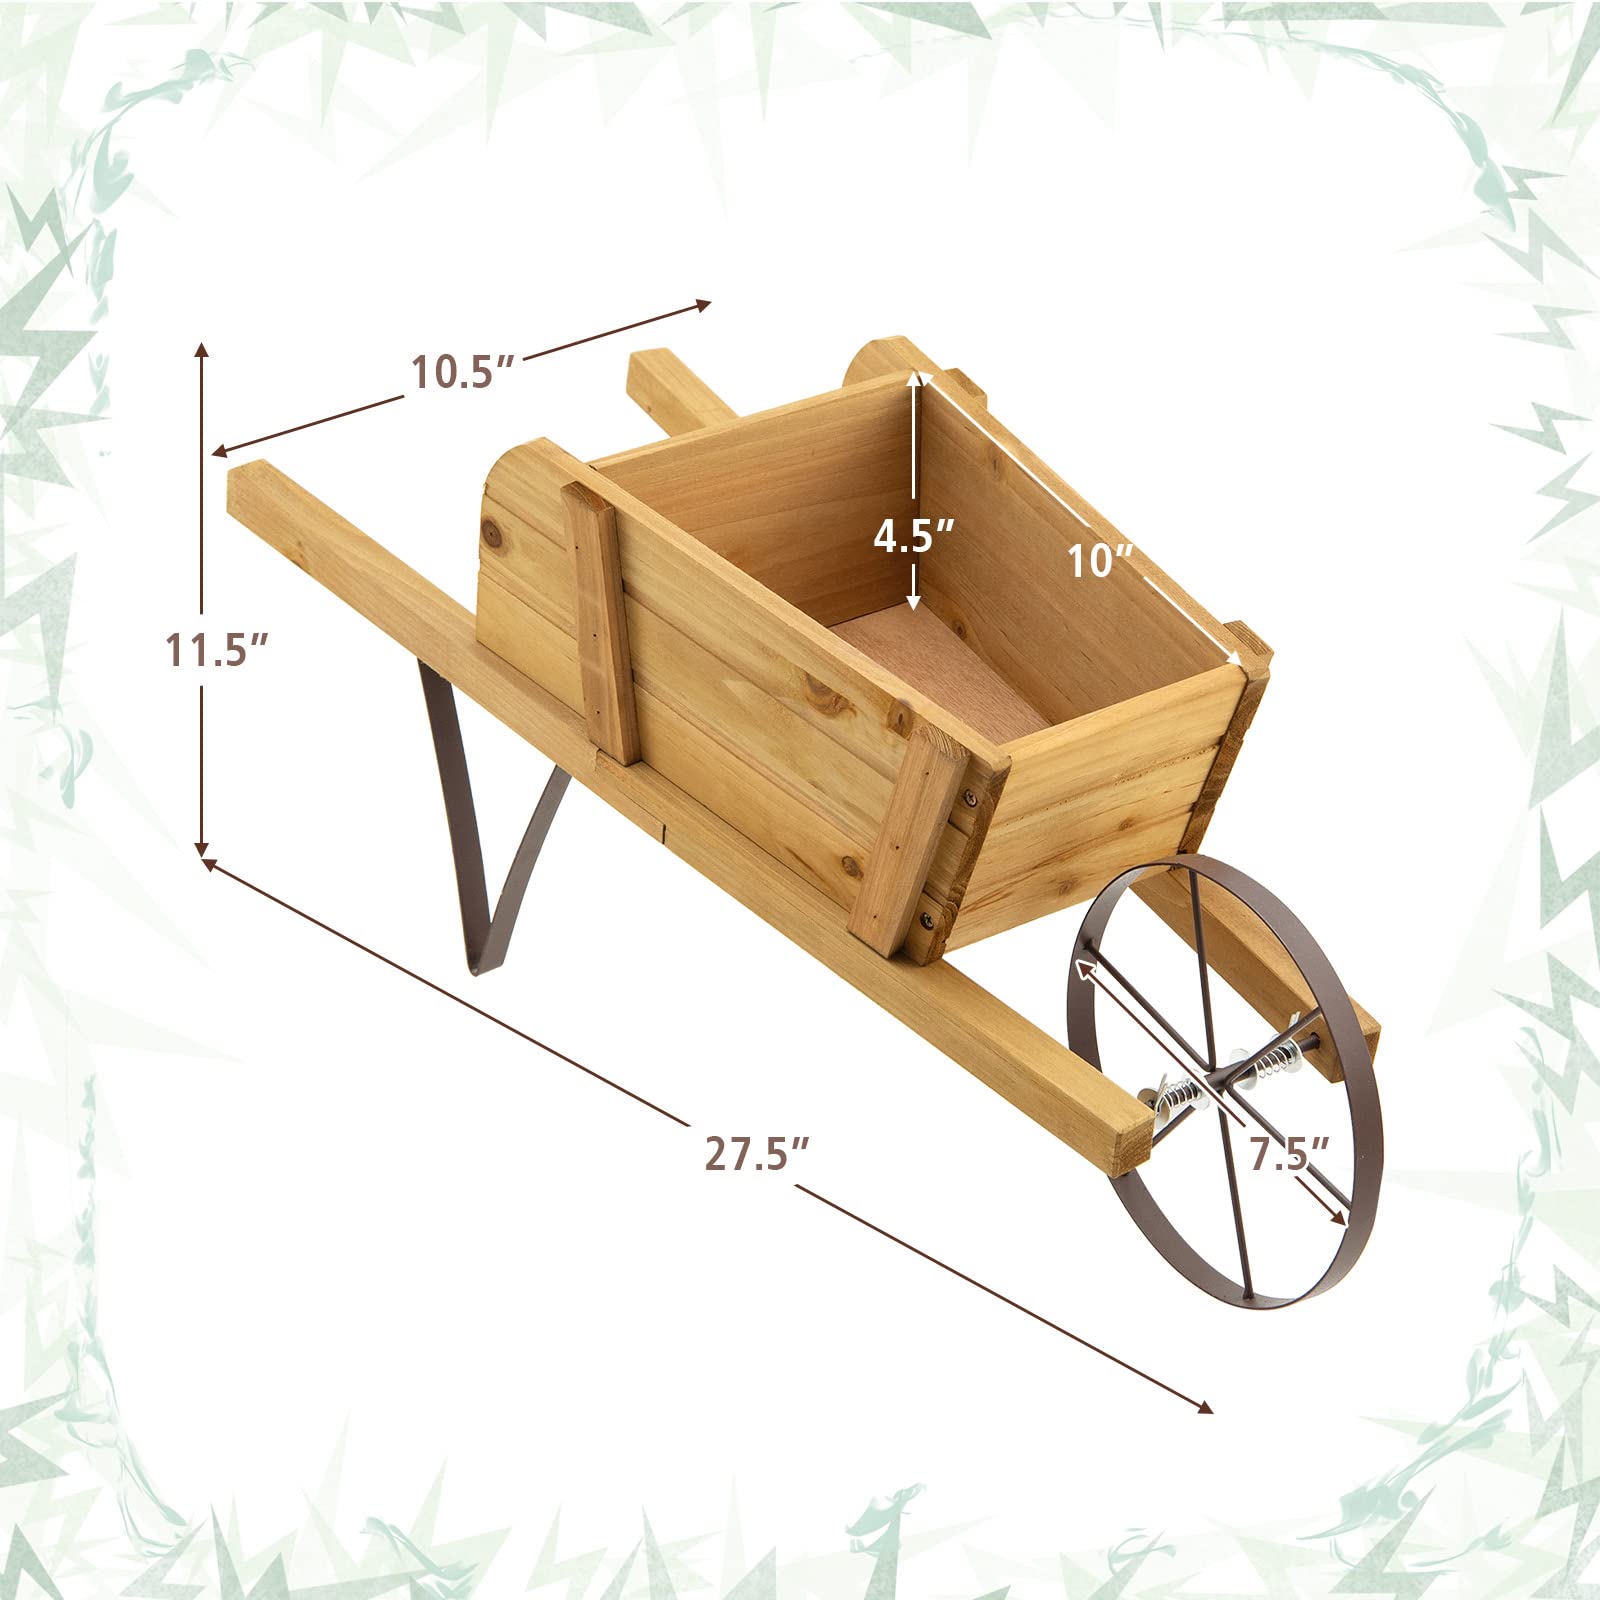 Giantex Wooden Wagon Planter, Small Wheelbarrow Wagon Flower, Indoor & Outdoor Raised Bed